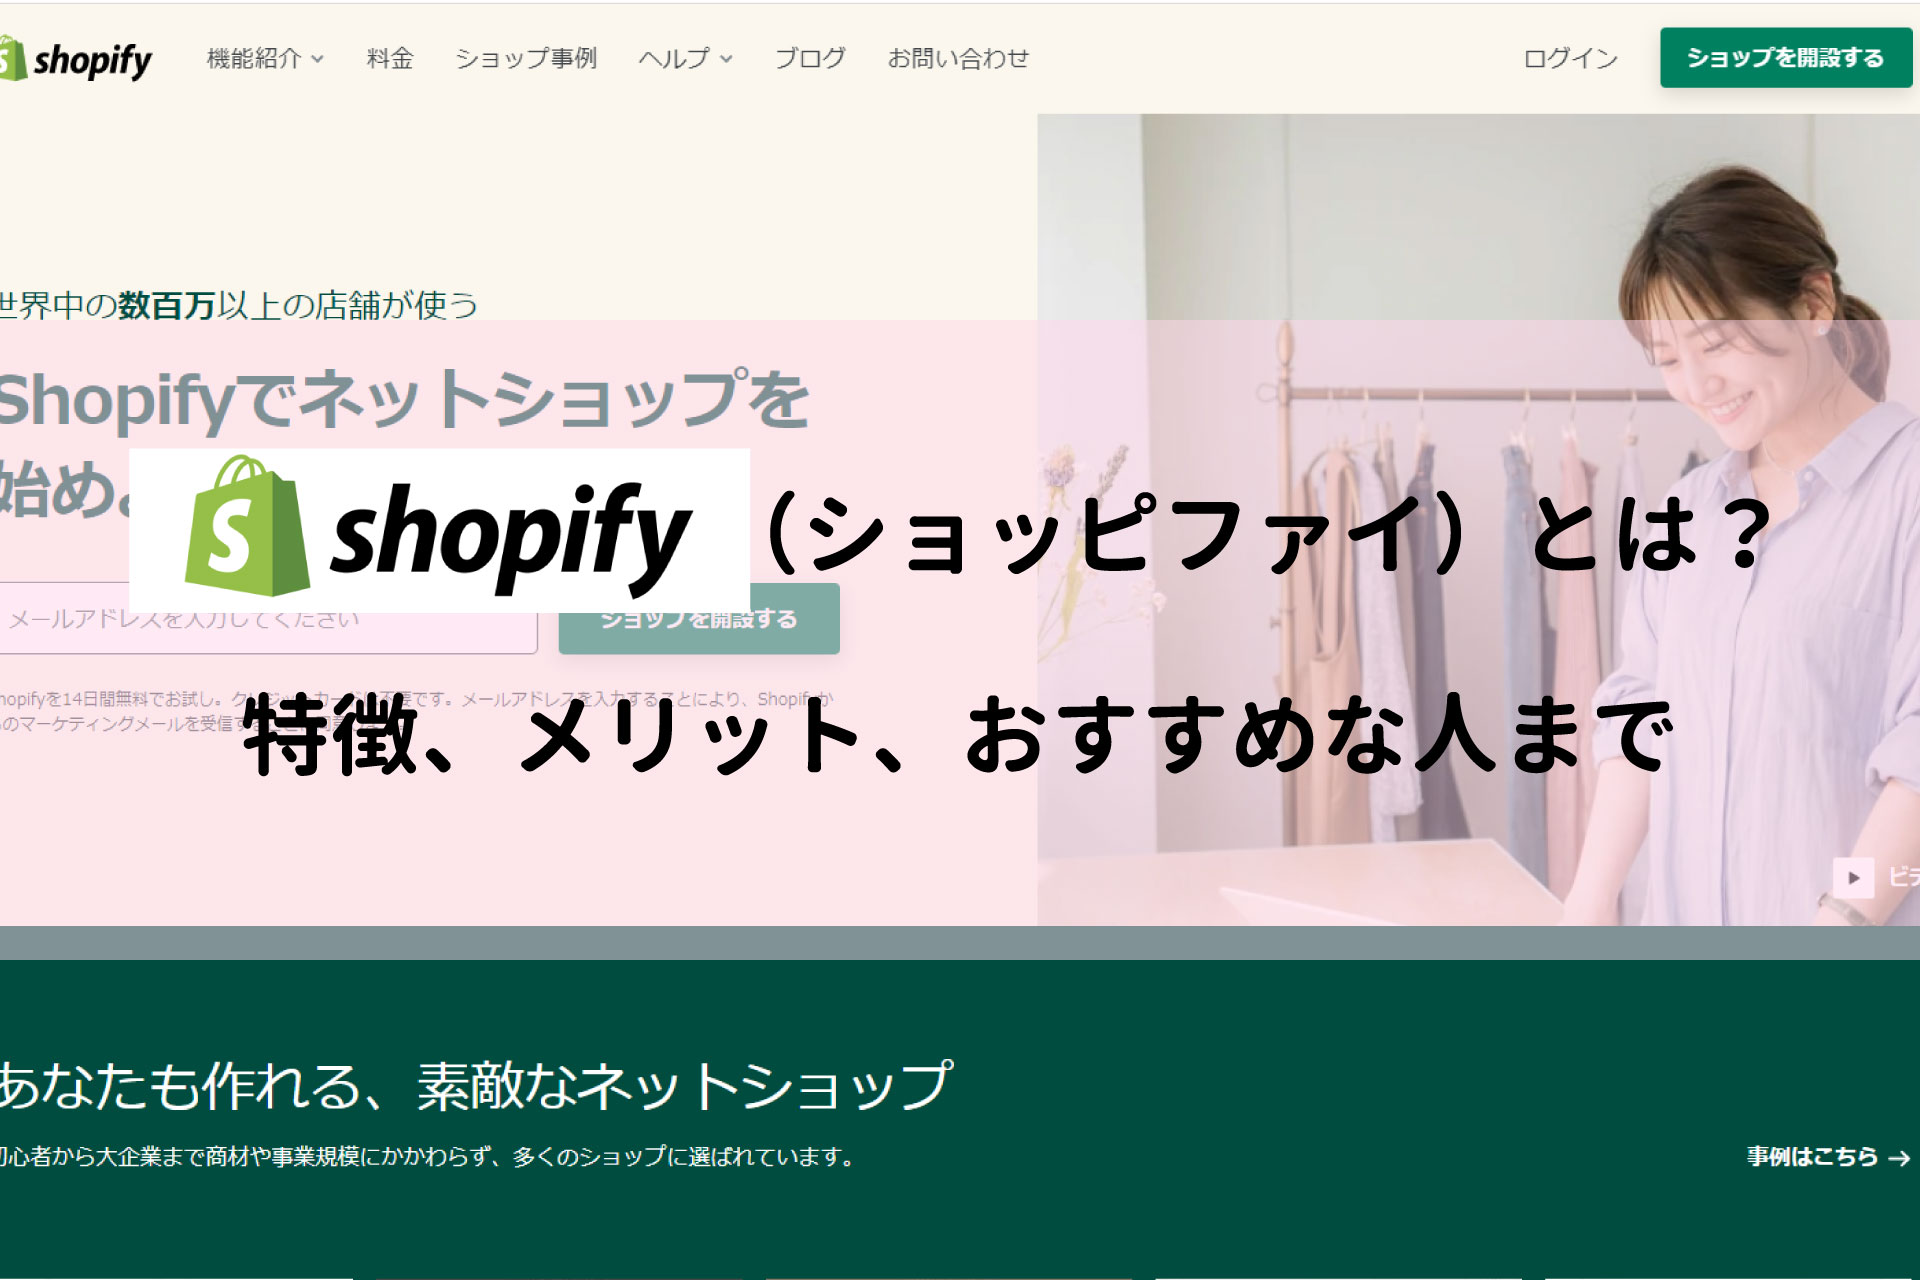 Shopify（ショッピファイ）とは？特徴、メリット、おすすめな人まで